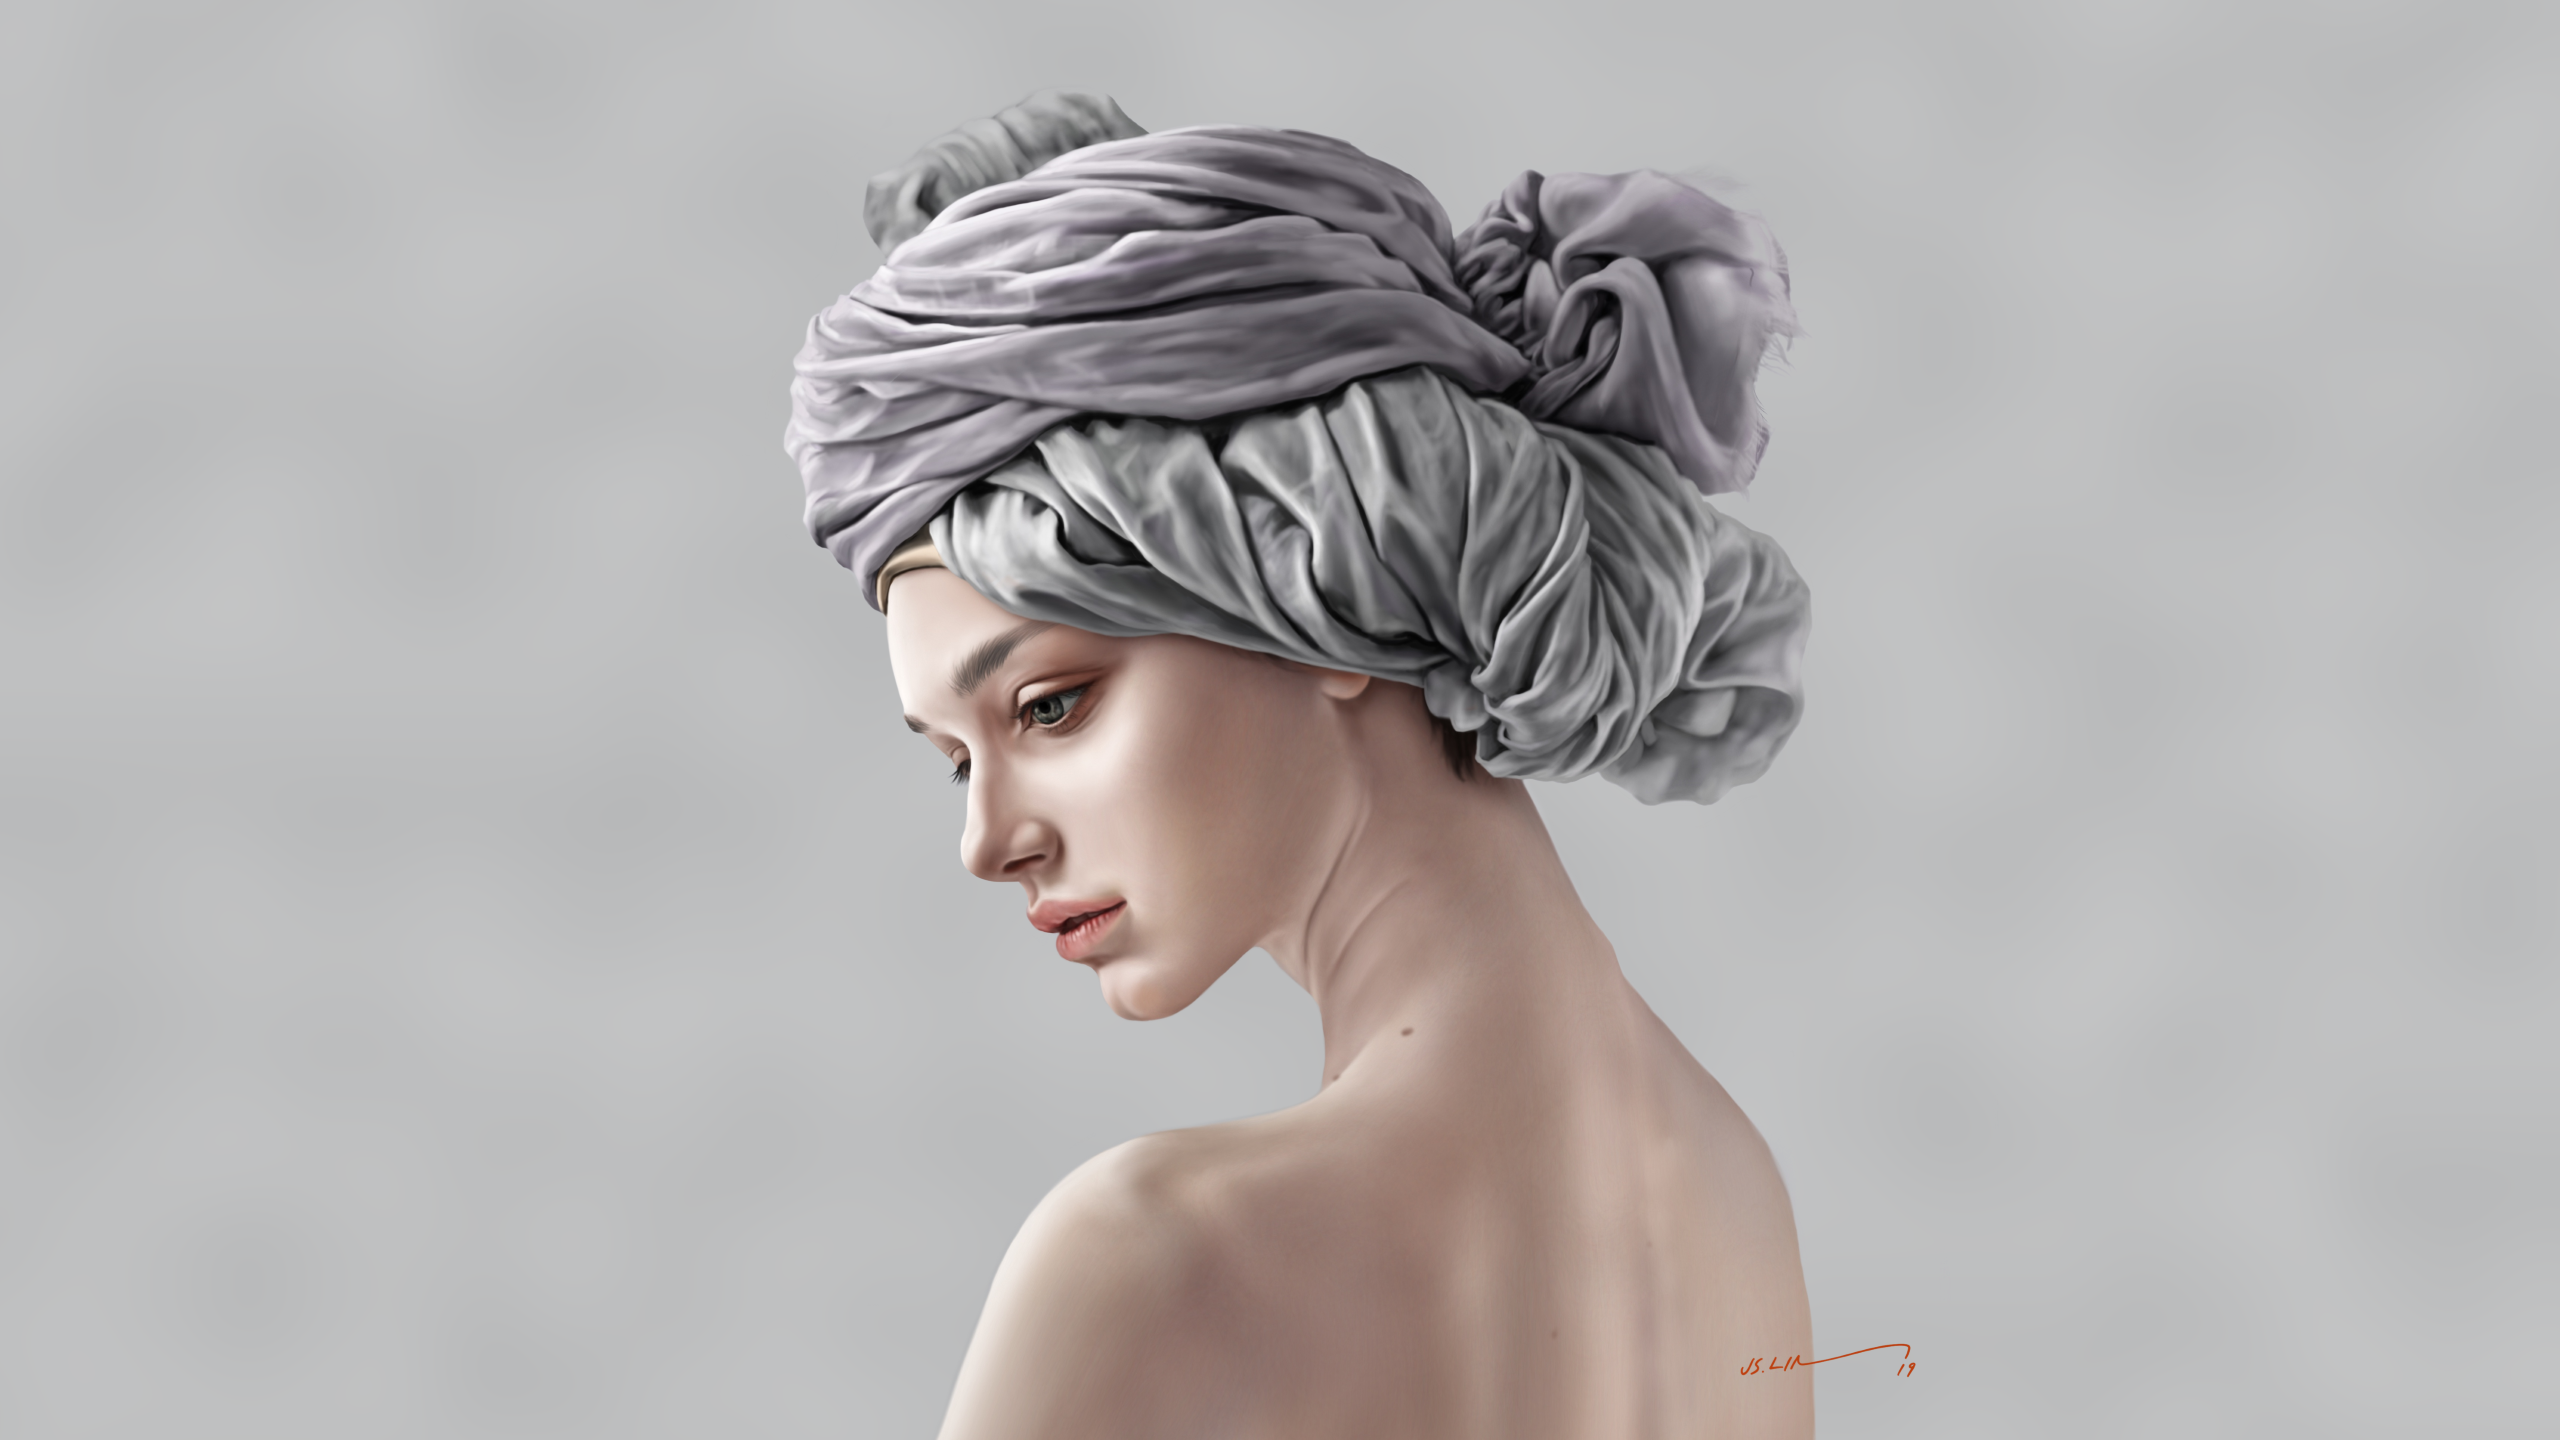 Women Portrait Gray Eyes Looking Away Bare Shoulders Back Cloth Artwork Digital Art Drawing Digital  2560x1440